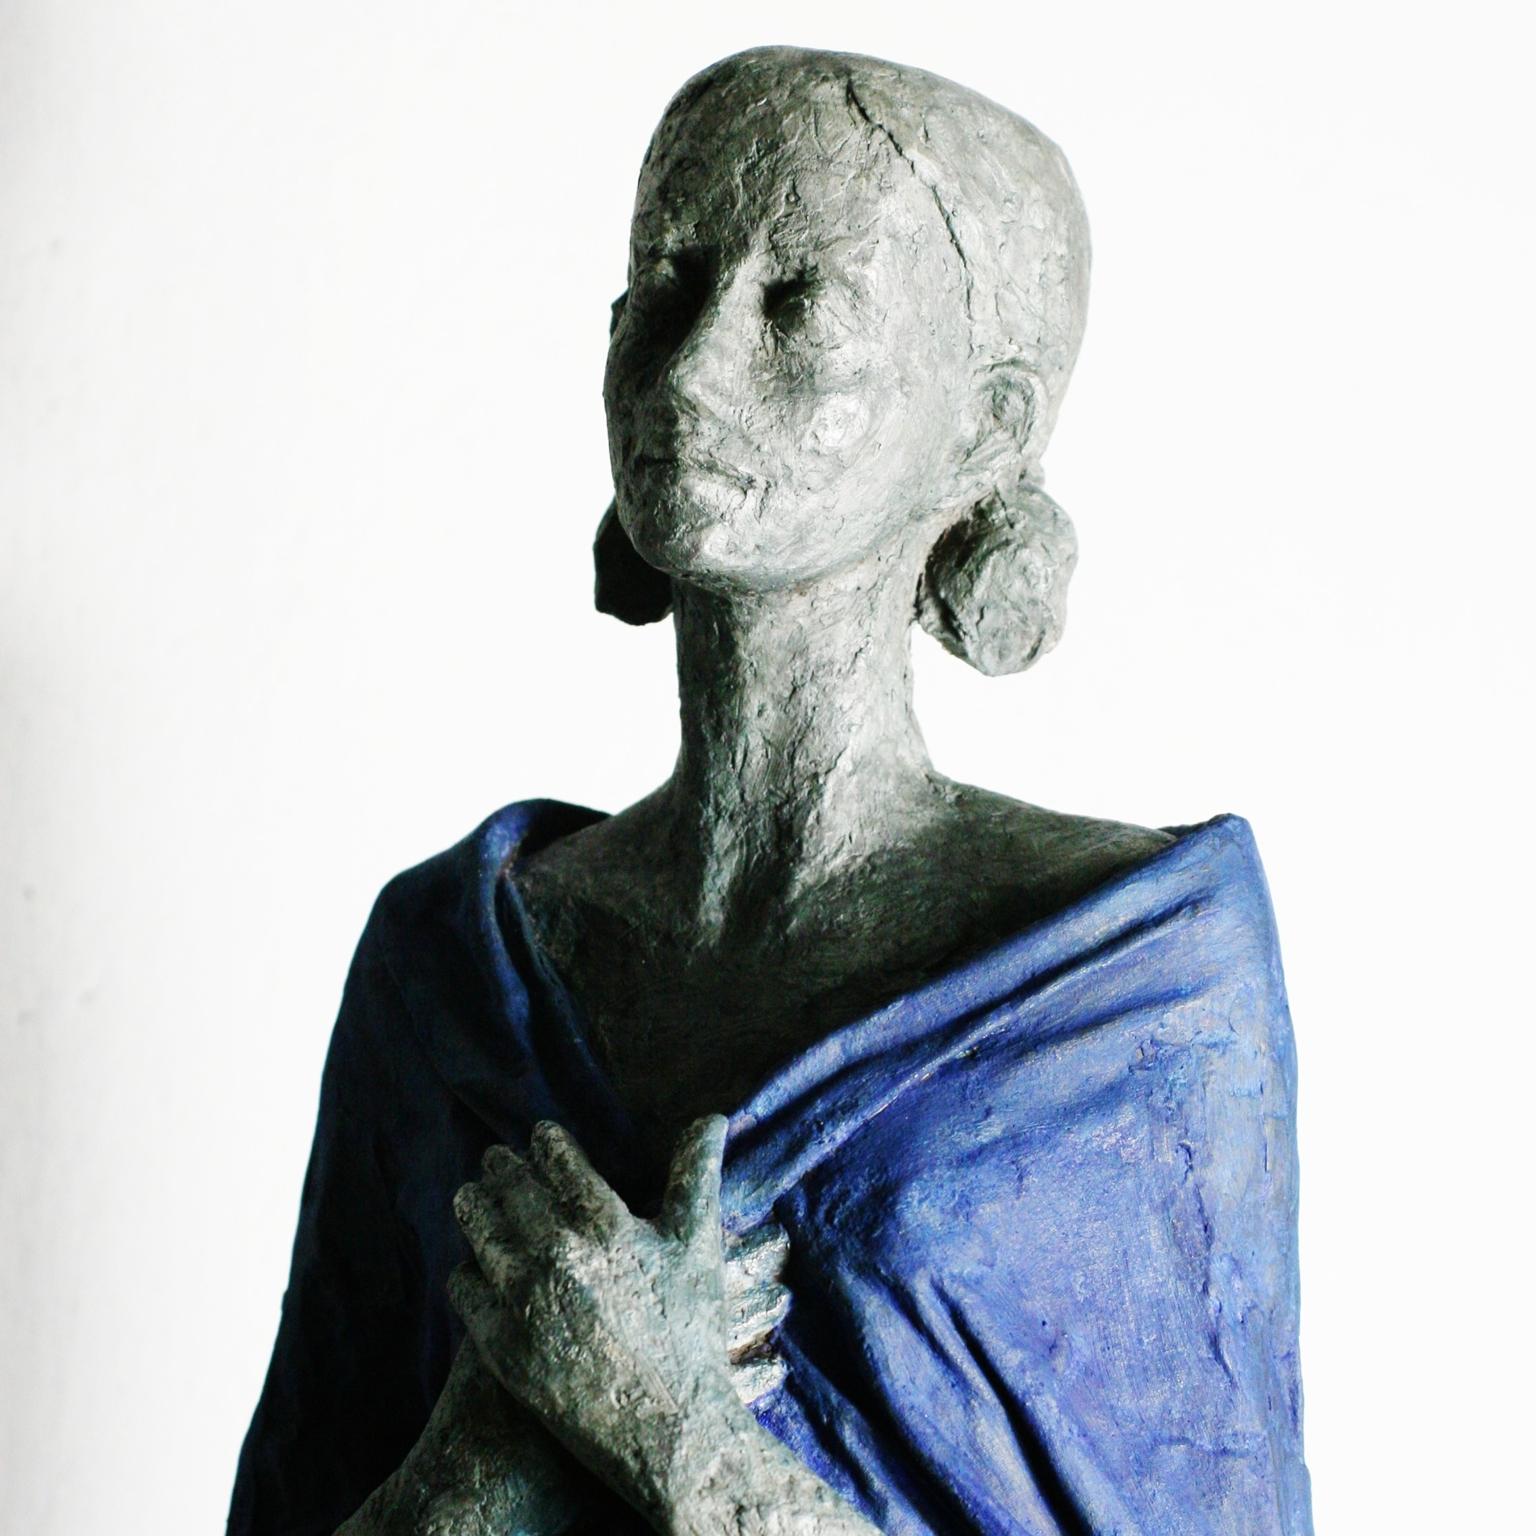 Woman with Blue Cape (Day after Christmas) - contemporary bronze sculpture  - Sculpture by Susanne Kraisser